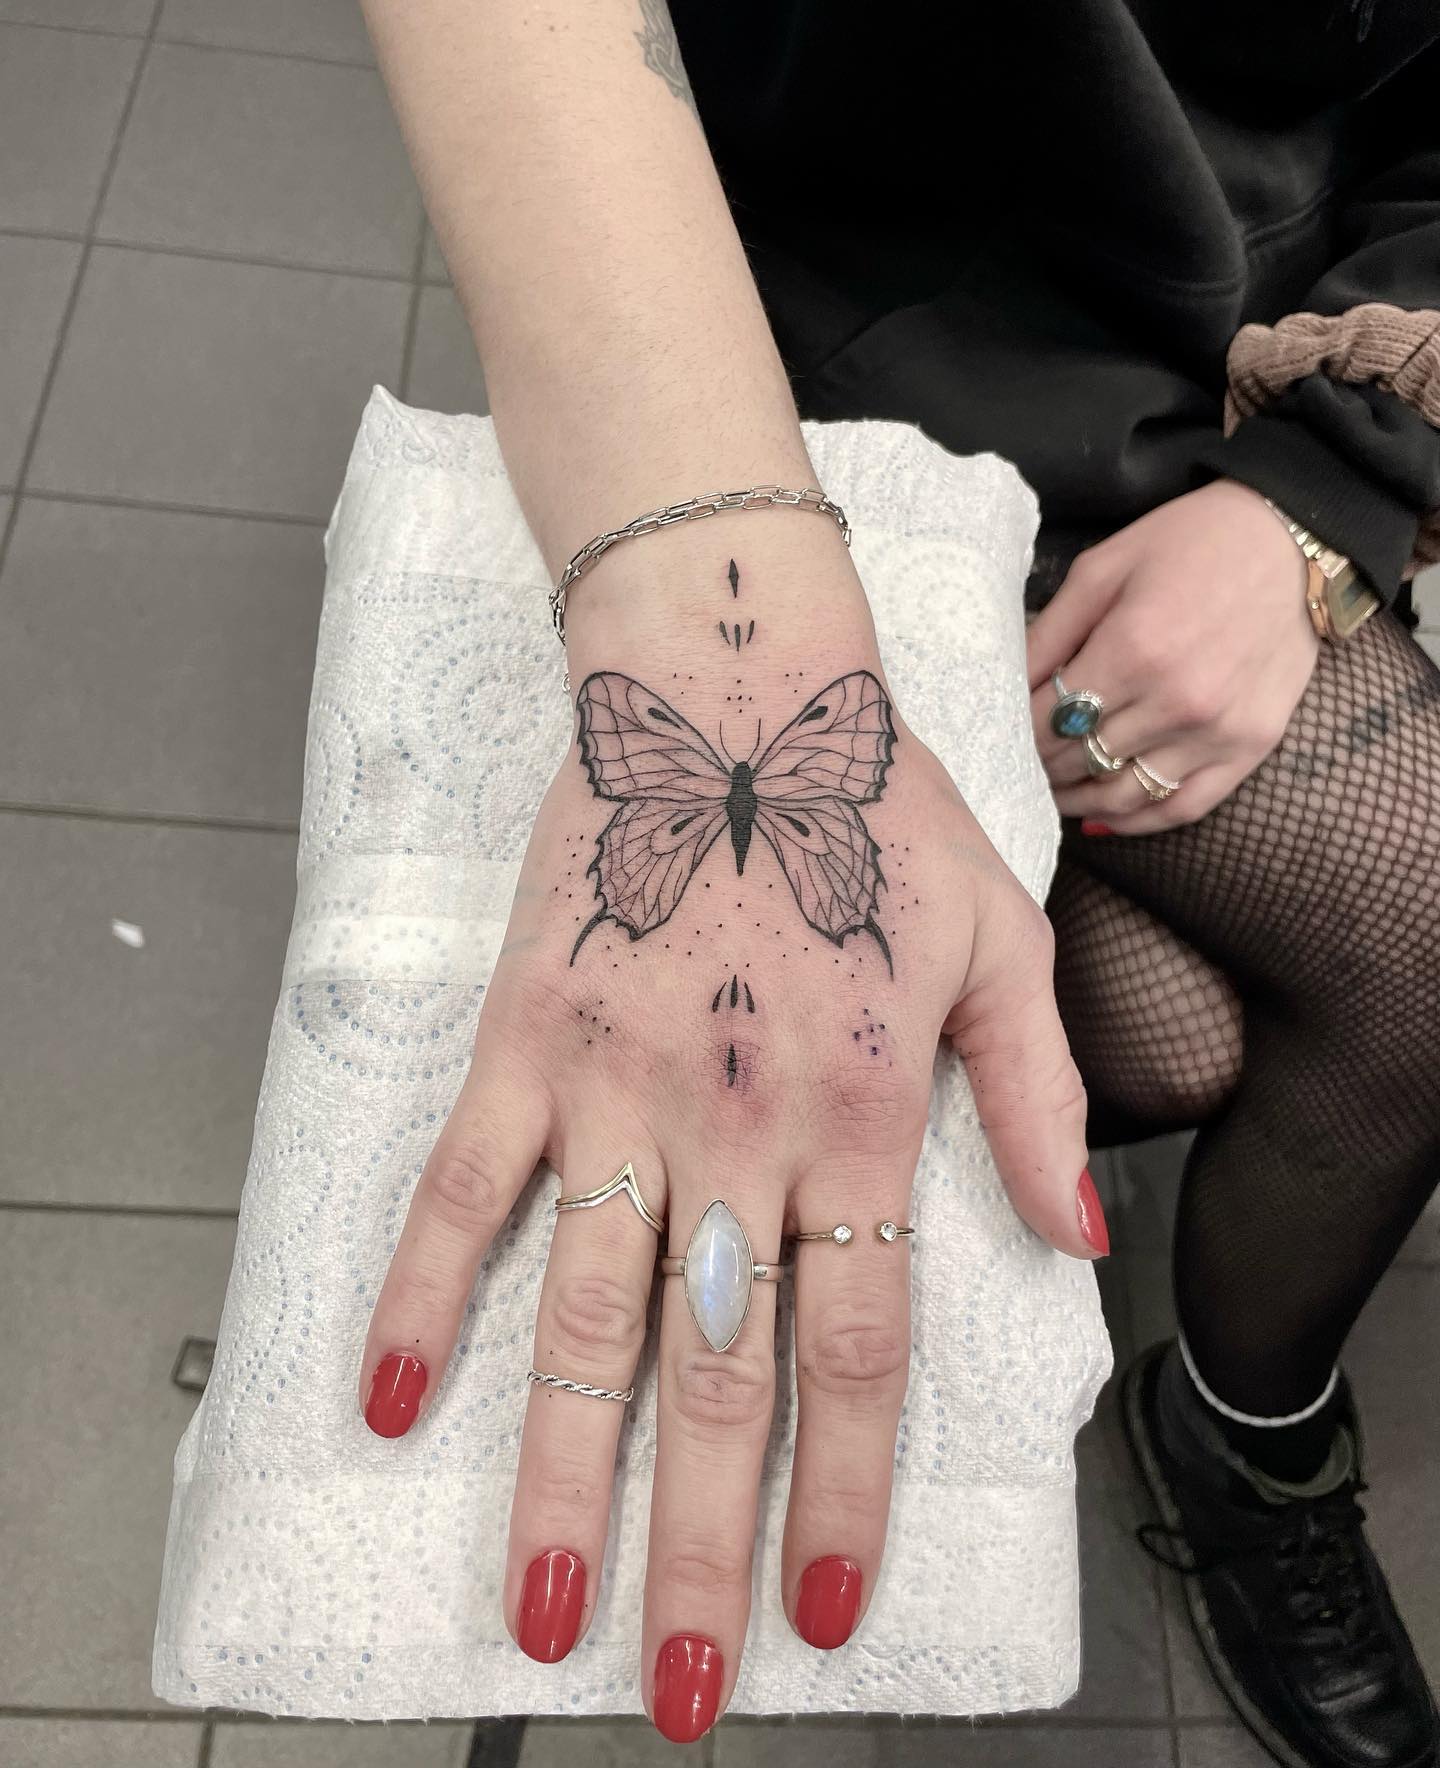 The Canvas Arts Temporary Tattoo Waterproof For Men Women Wrist Arm Hand  Shoulder Flower Butterfly Tattoo M23 Flower Butterfly Tattoo Size 19X09  cm  Amazonin Beauty